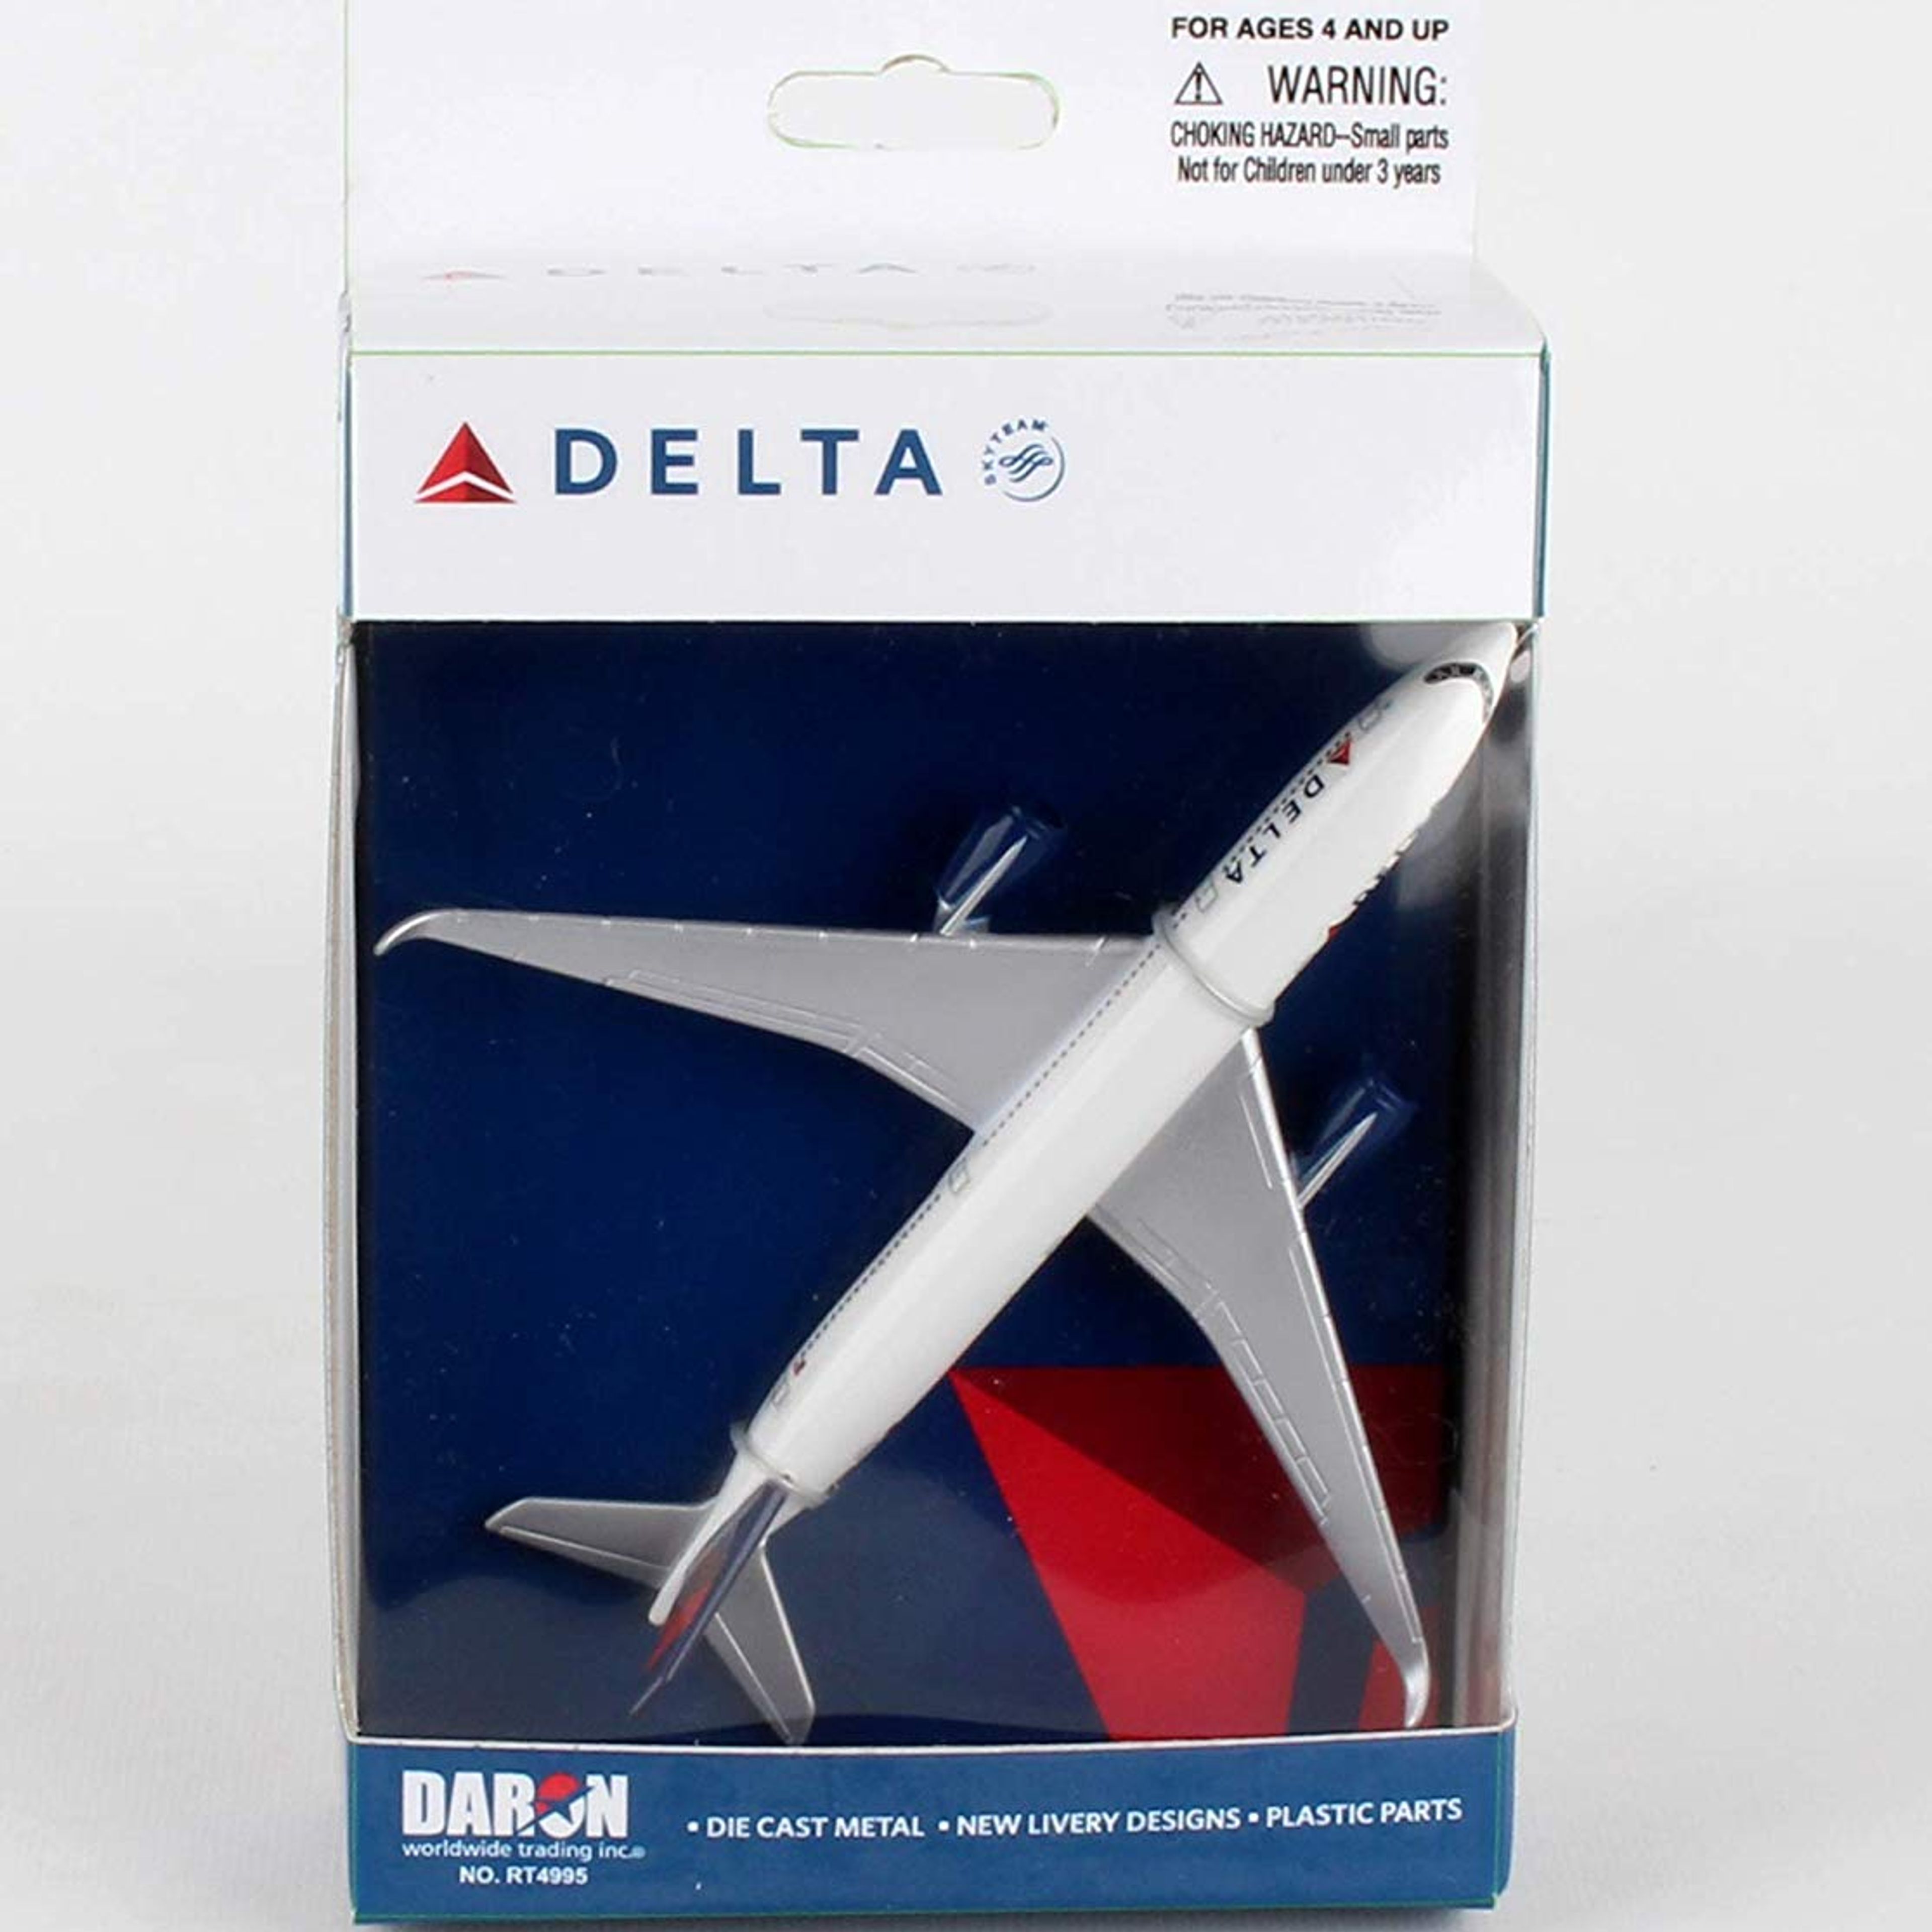 Delta Airlines A350 Single Plane